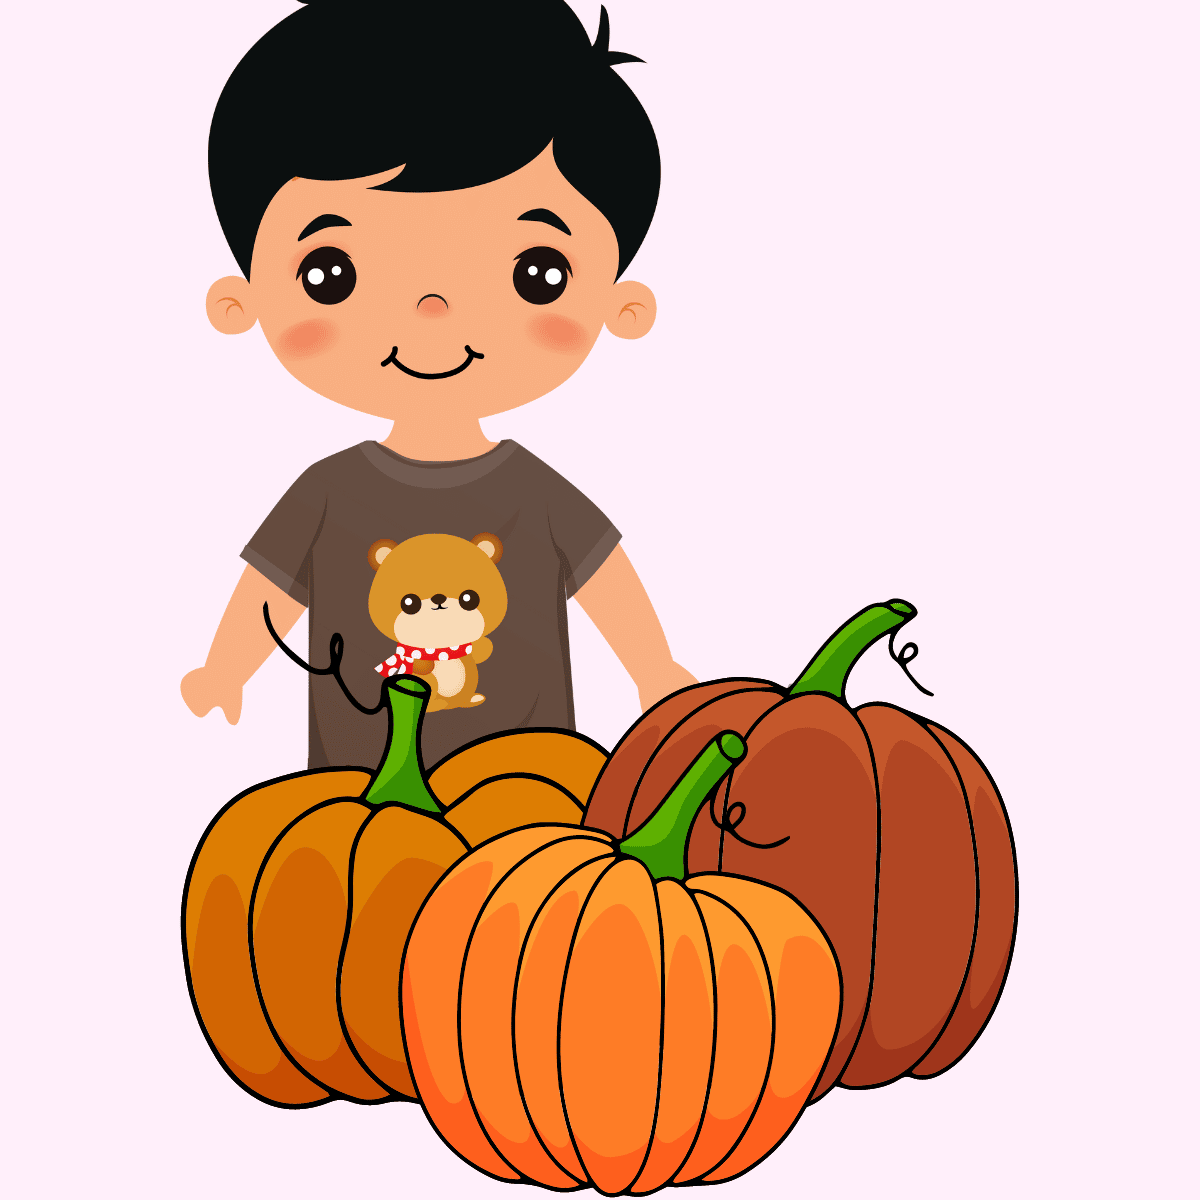 Child next to pumpkins digital drawing